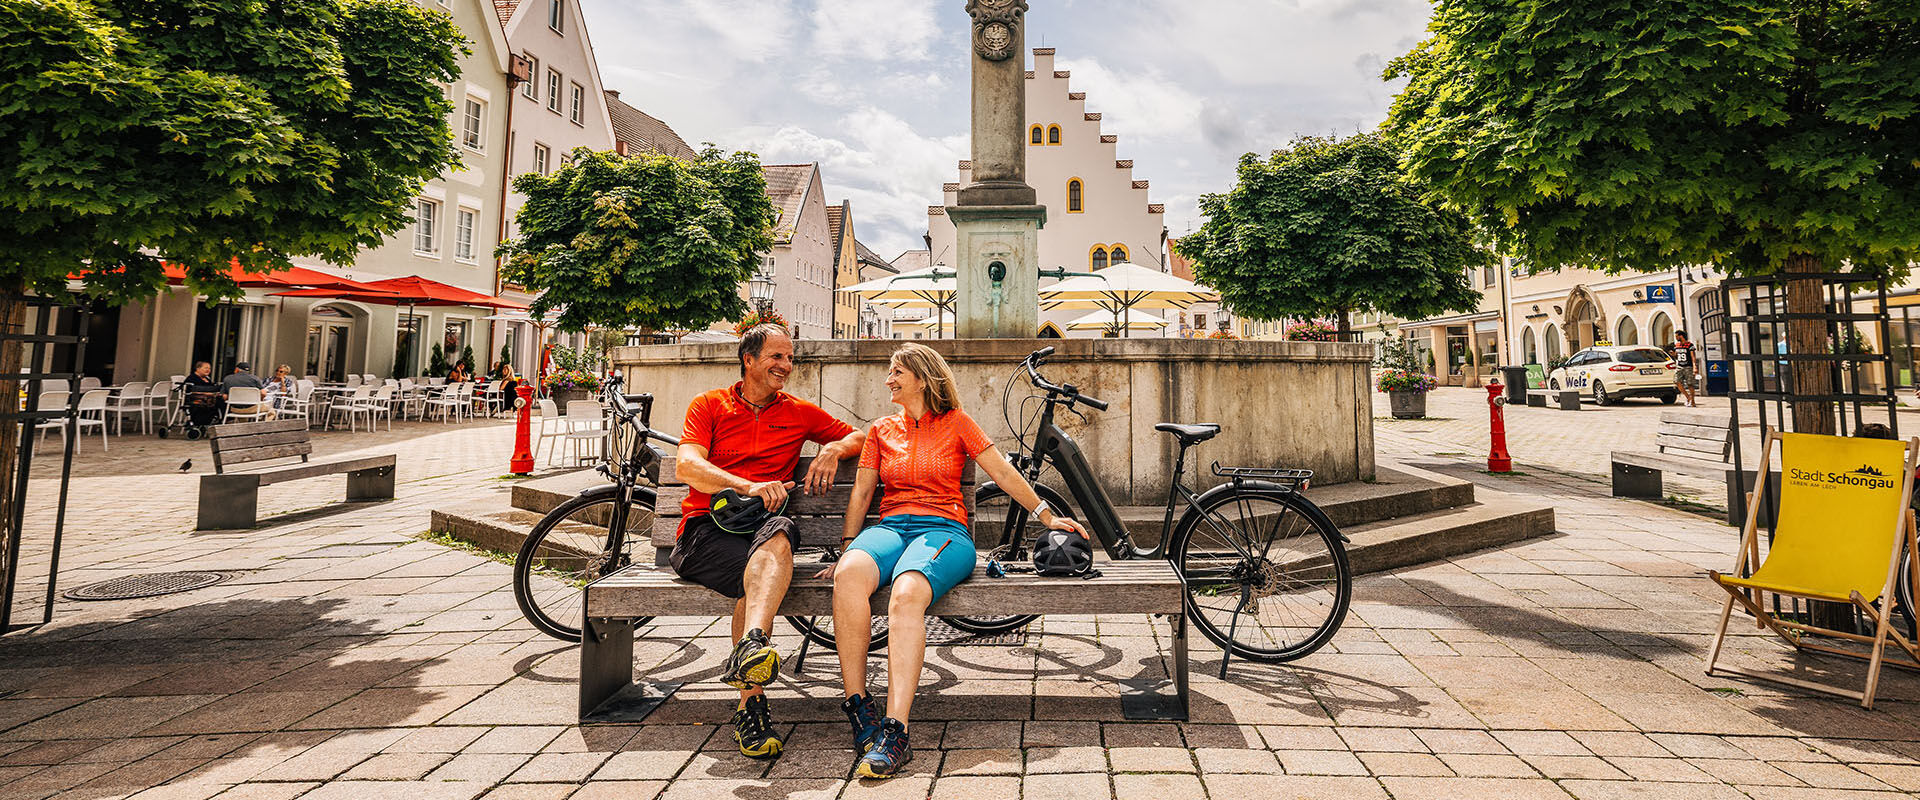 Udgangspunktet München: tre cykelture på vandcykelstierne i Oberbayern